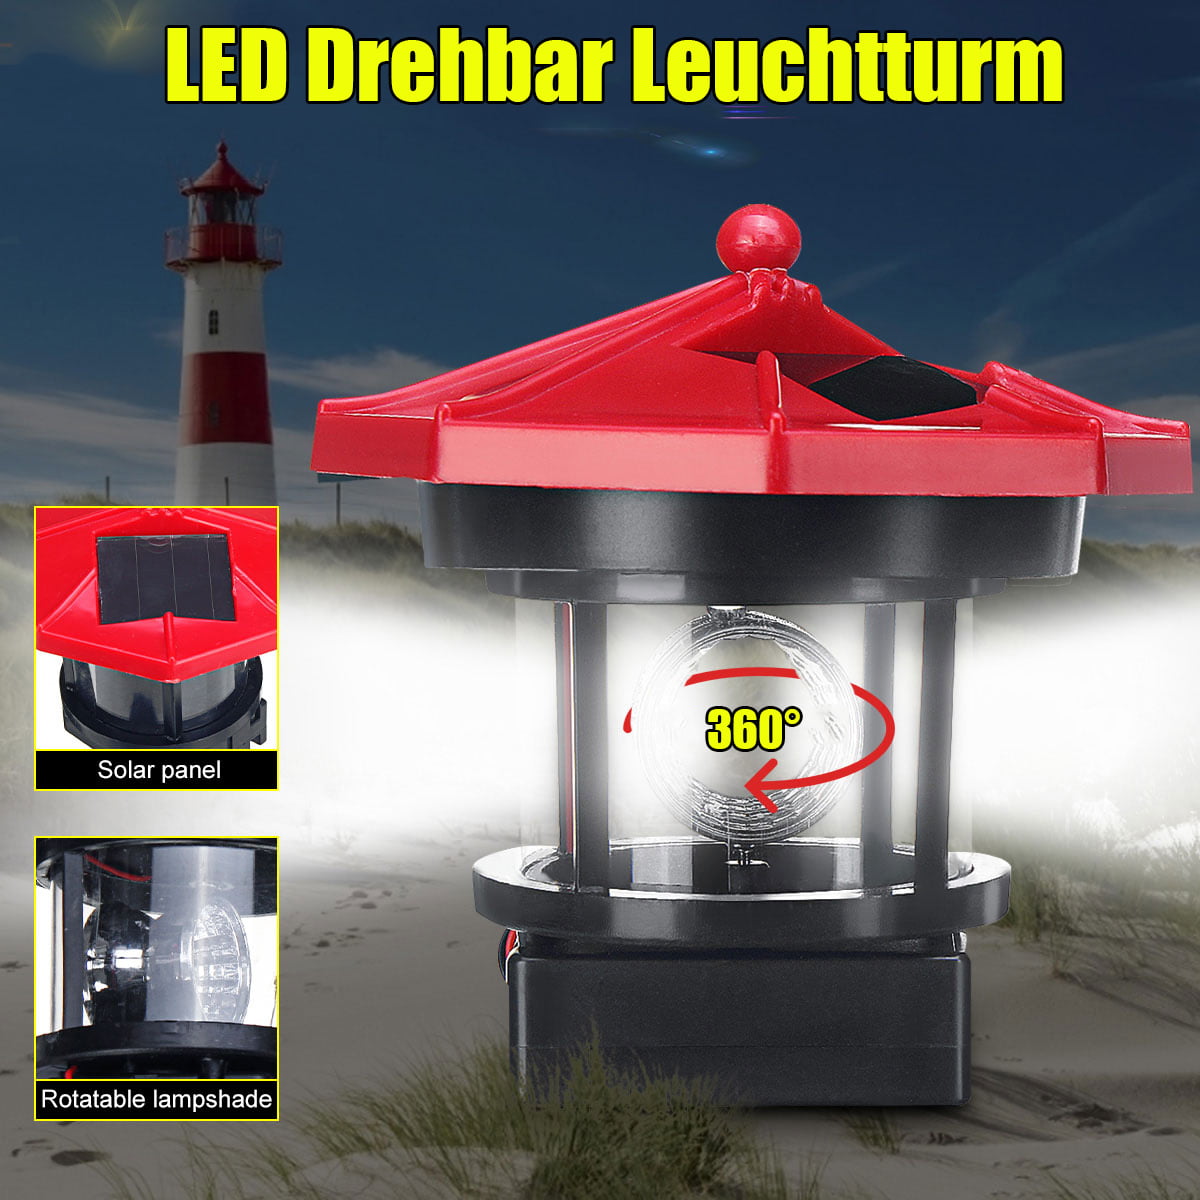 Solar Power LED Lighthouse Light With Rotatable Lampshade 360° Illumination Lamp 